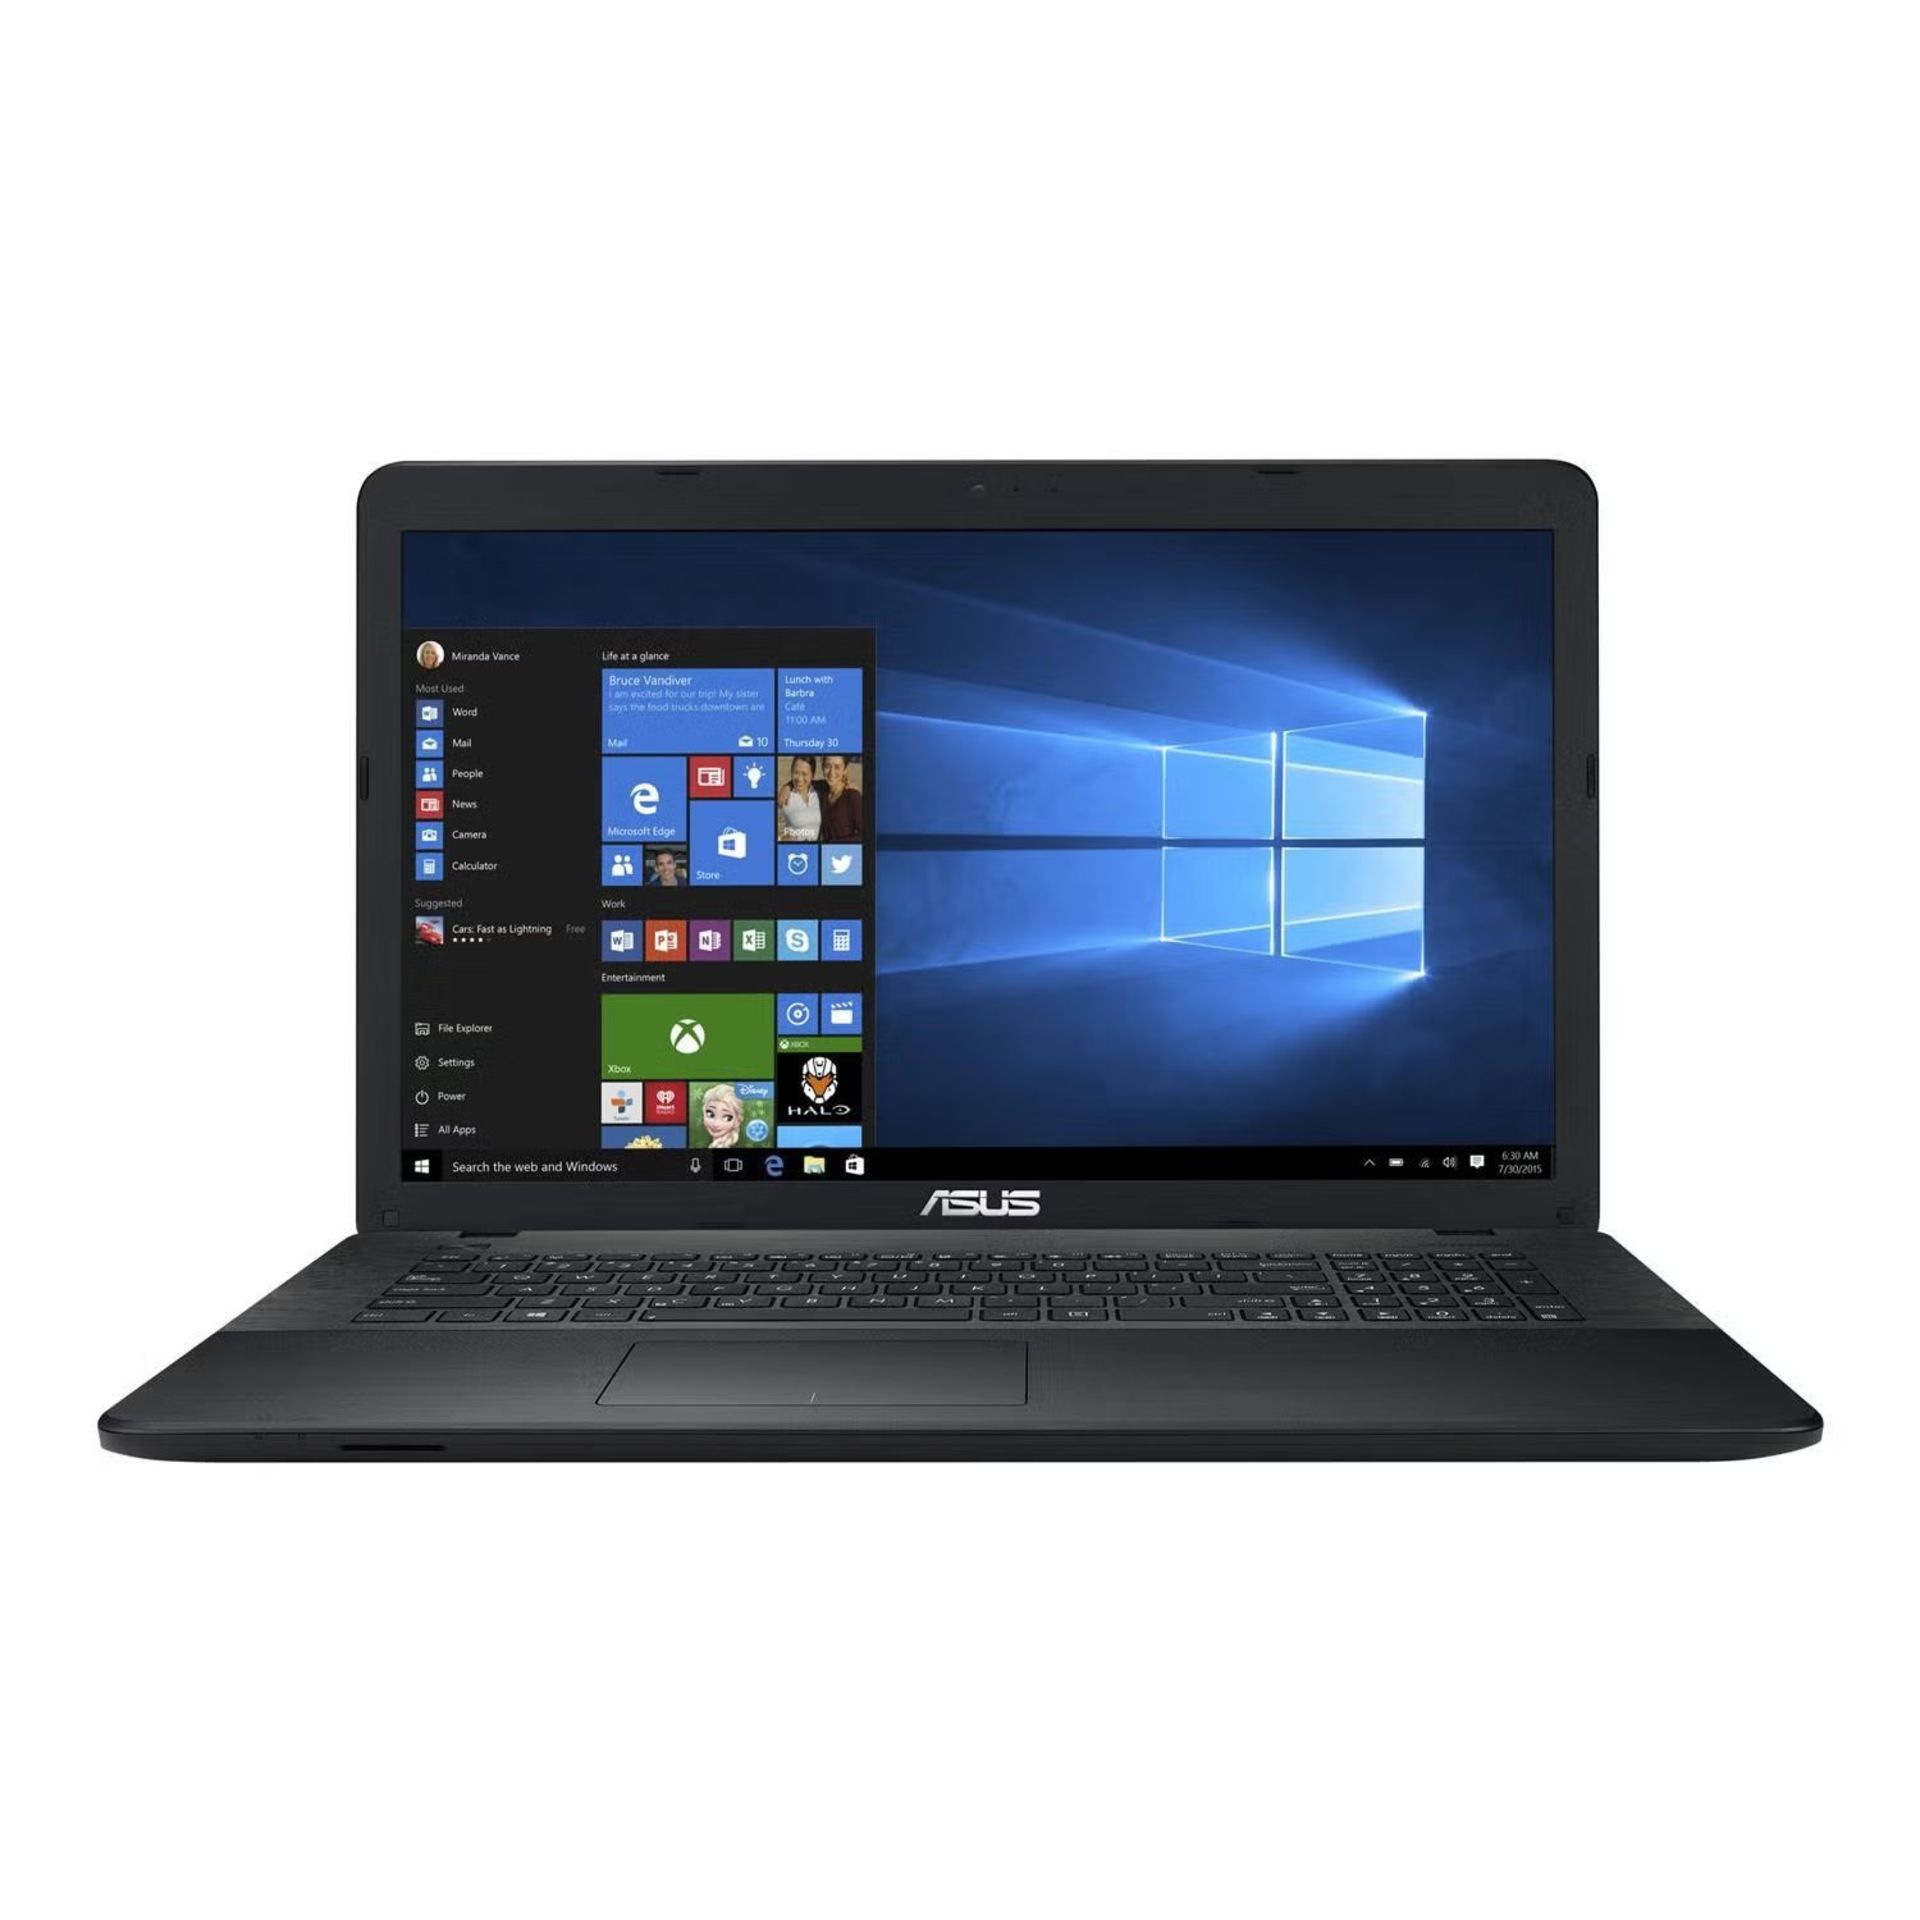 Asus X751NA Intel Celeron N3350 8GB 1TB DVD-RW 17.3 Inch Windows 10 Laptop. - PCKBW. RRP £510.00.